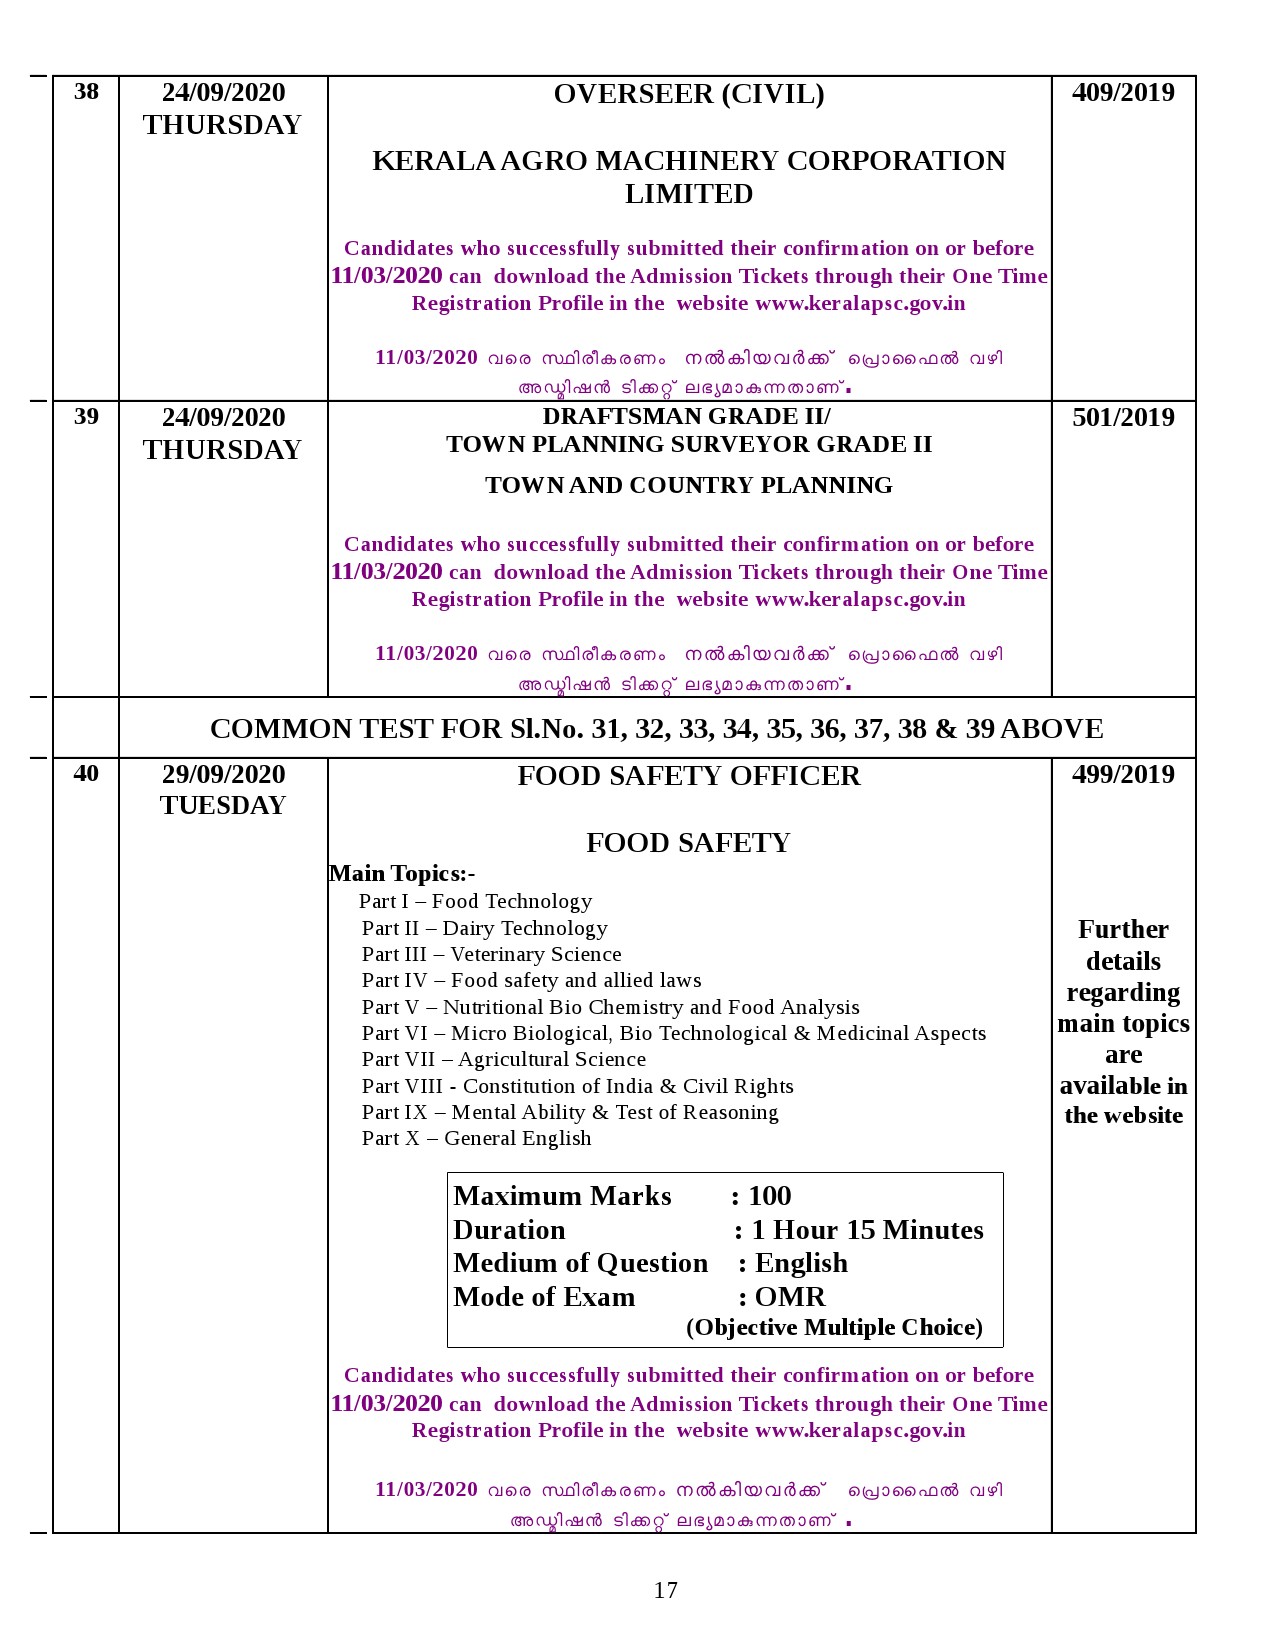 Kerala PSC Exam Calendar September 2020 - Notification Image 17